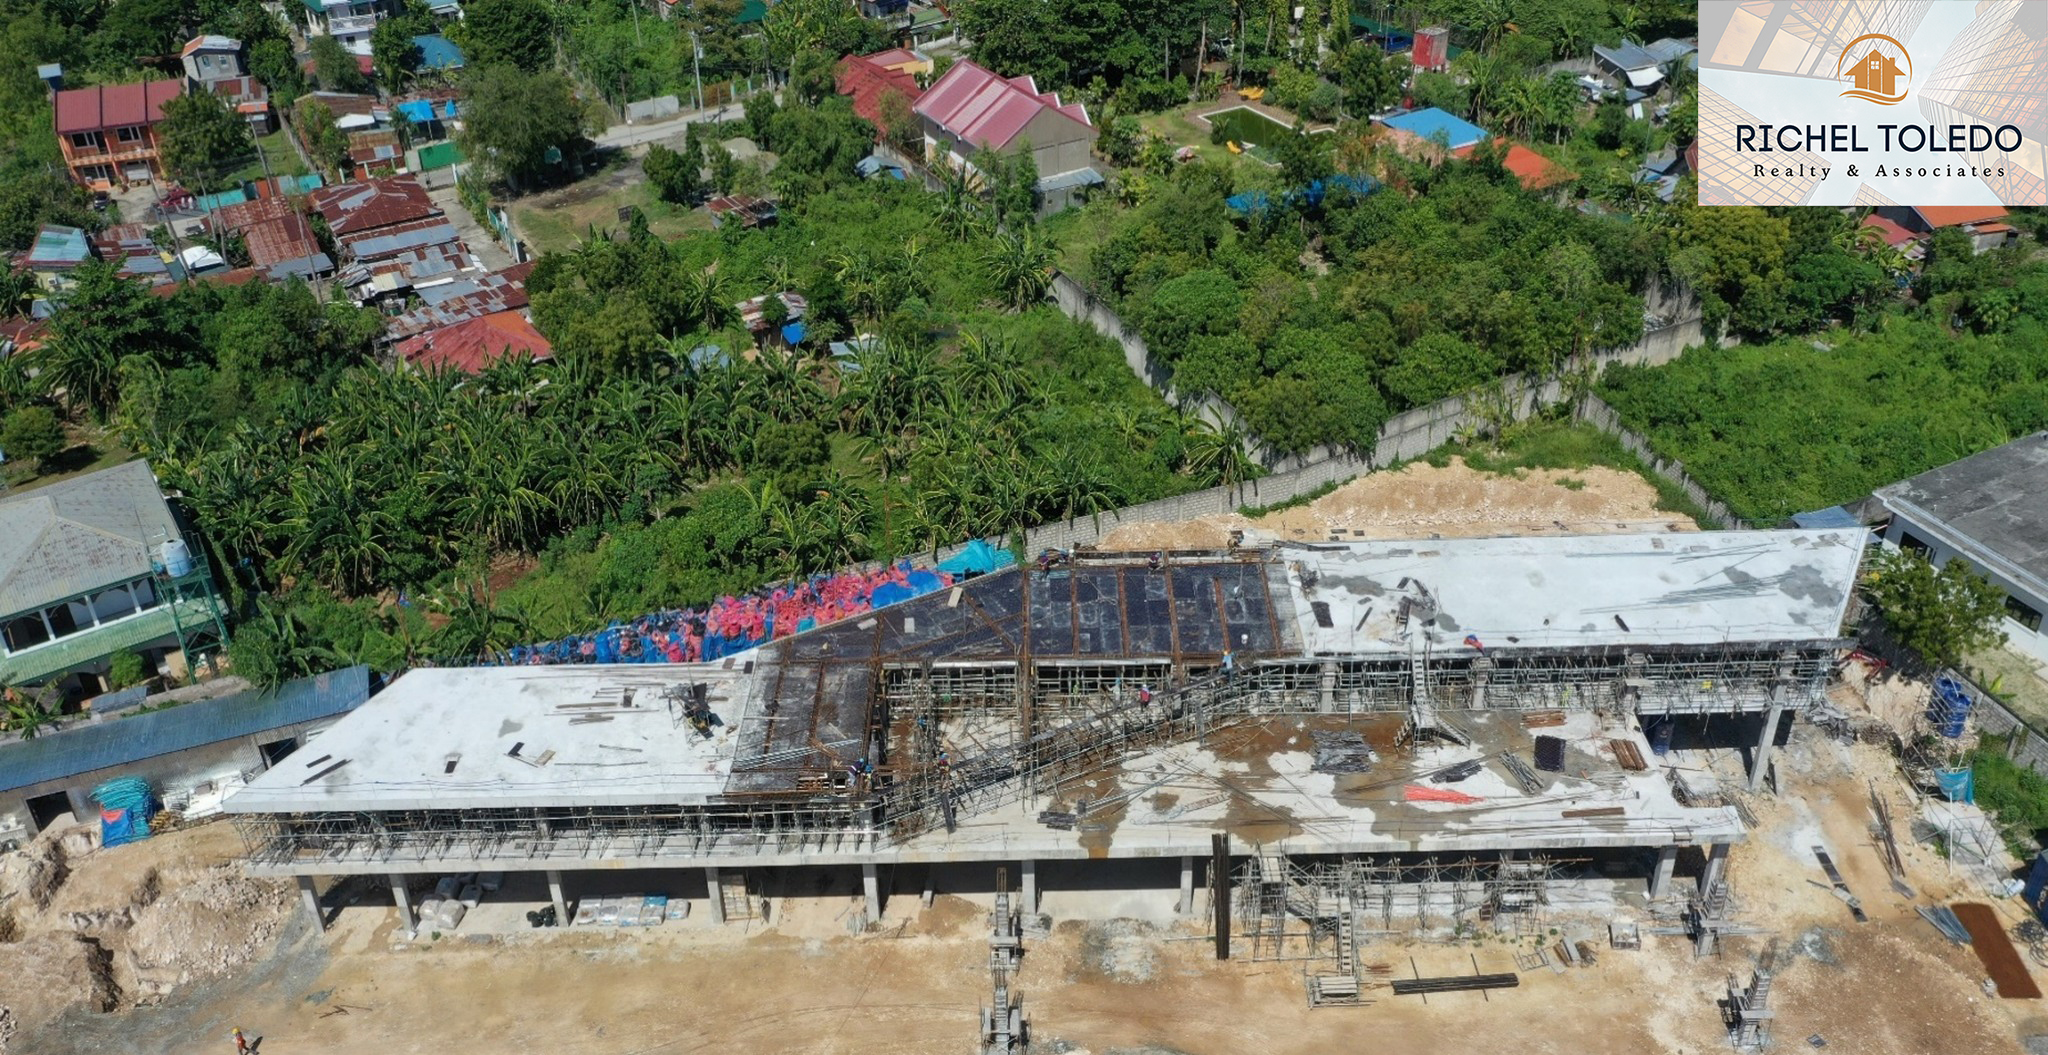 saekyung ocean residences, affordable preselling condo in cebu